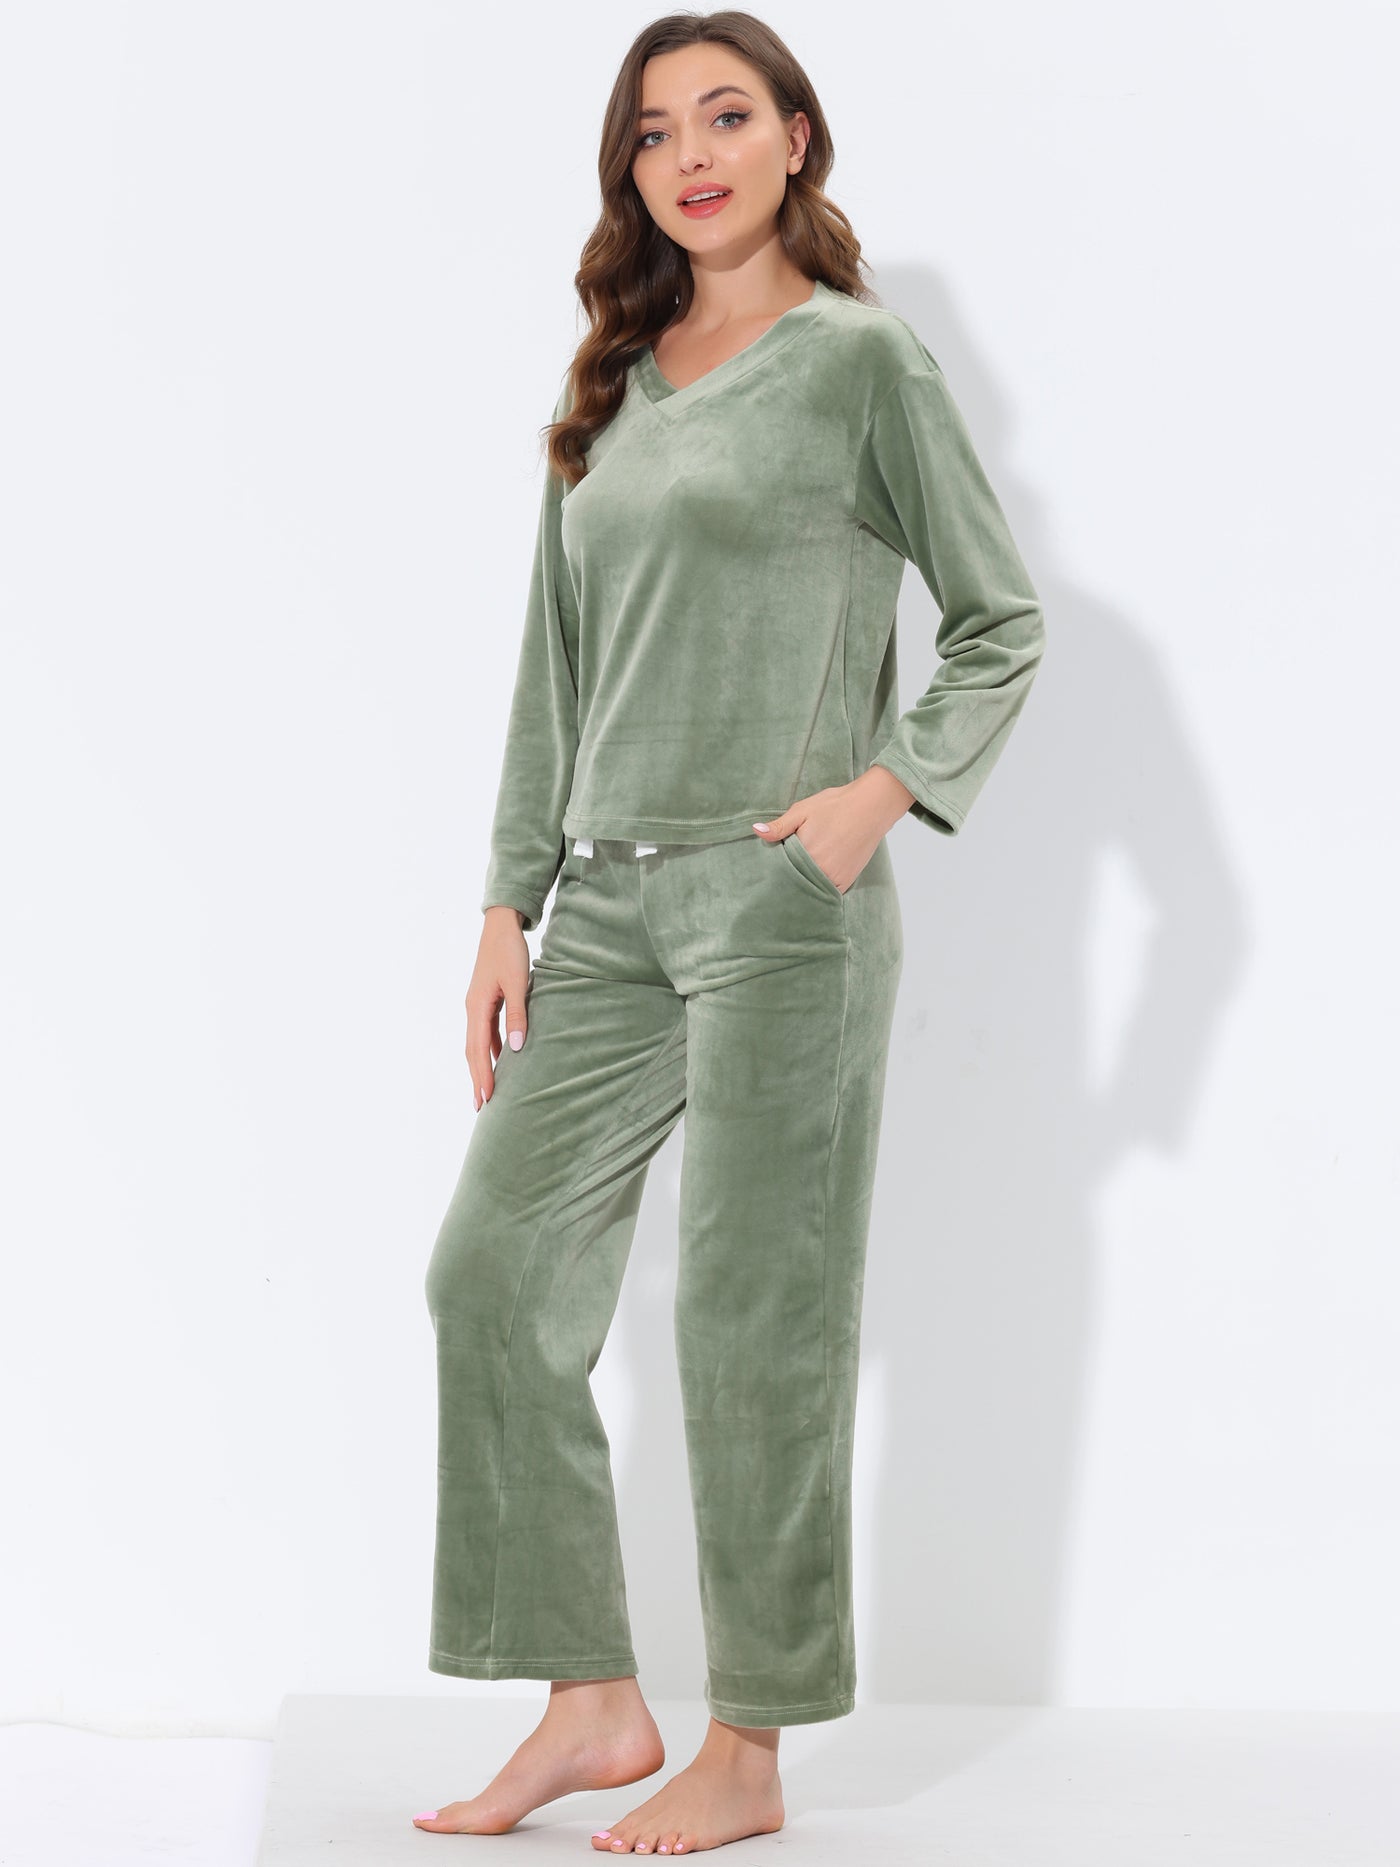 Bublédon Women's Sleepwear Velvet Nightwear with Pockets Pajama Sets